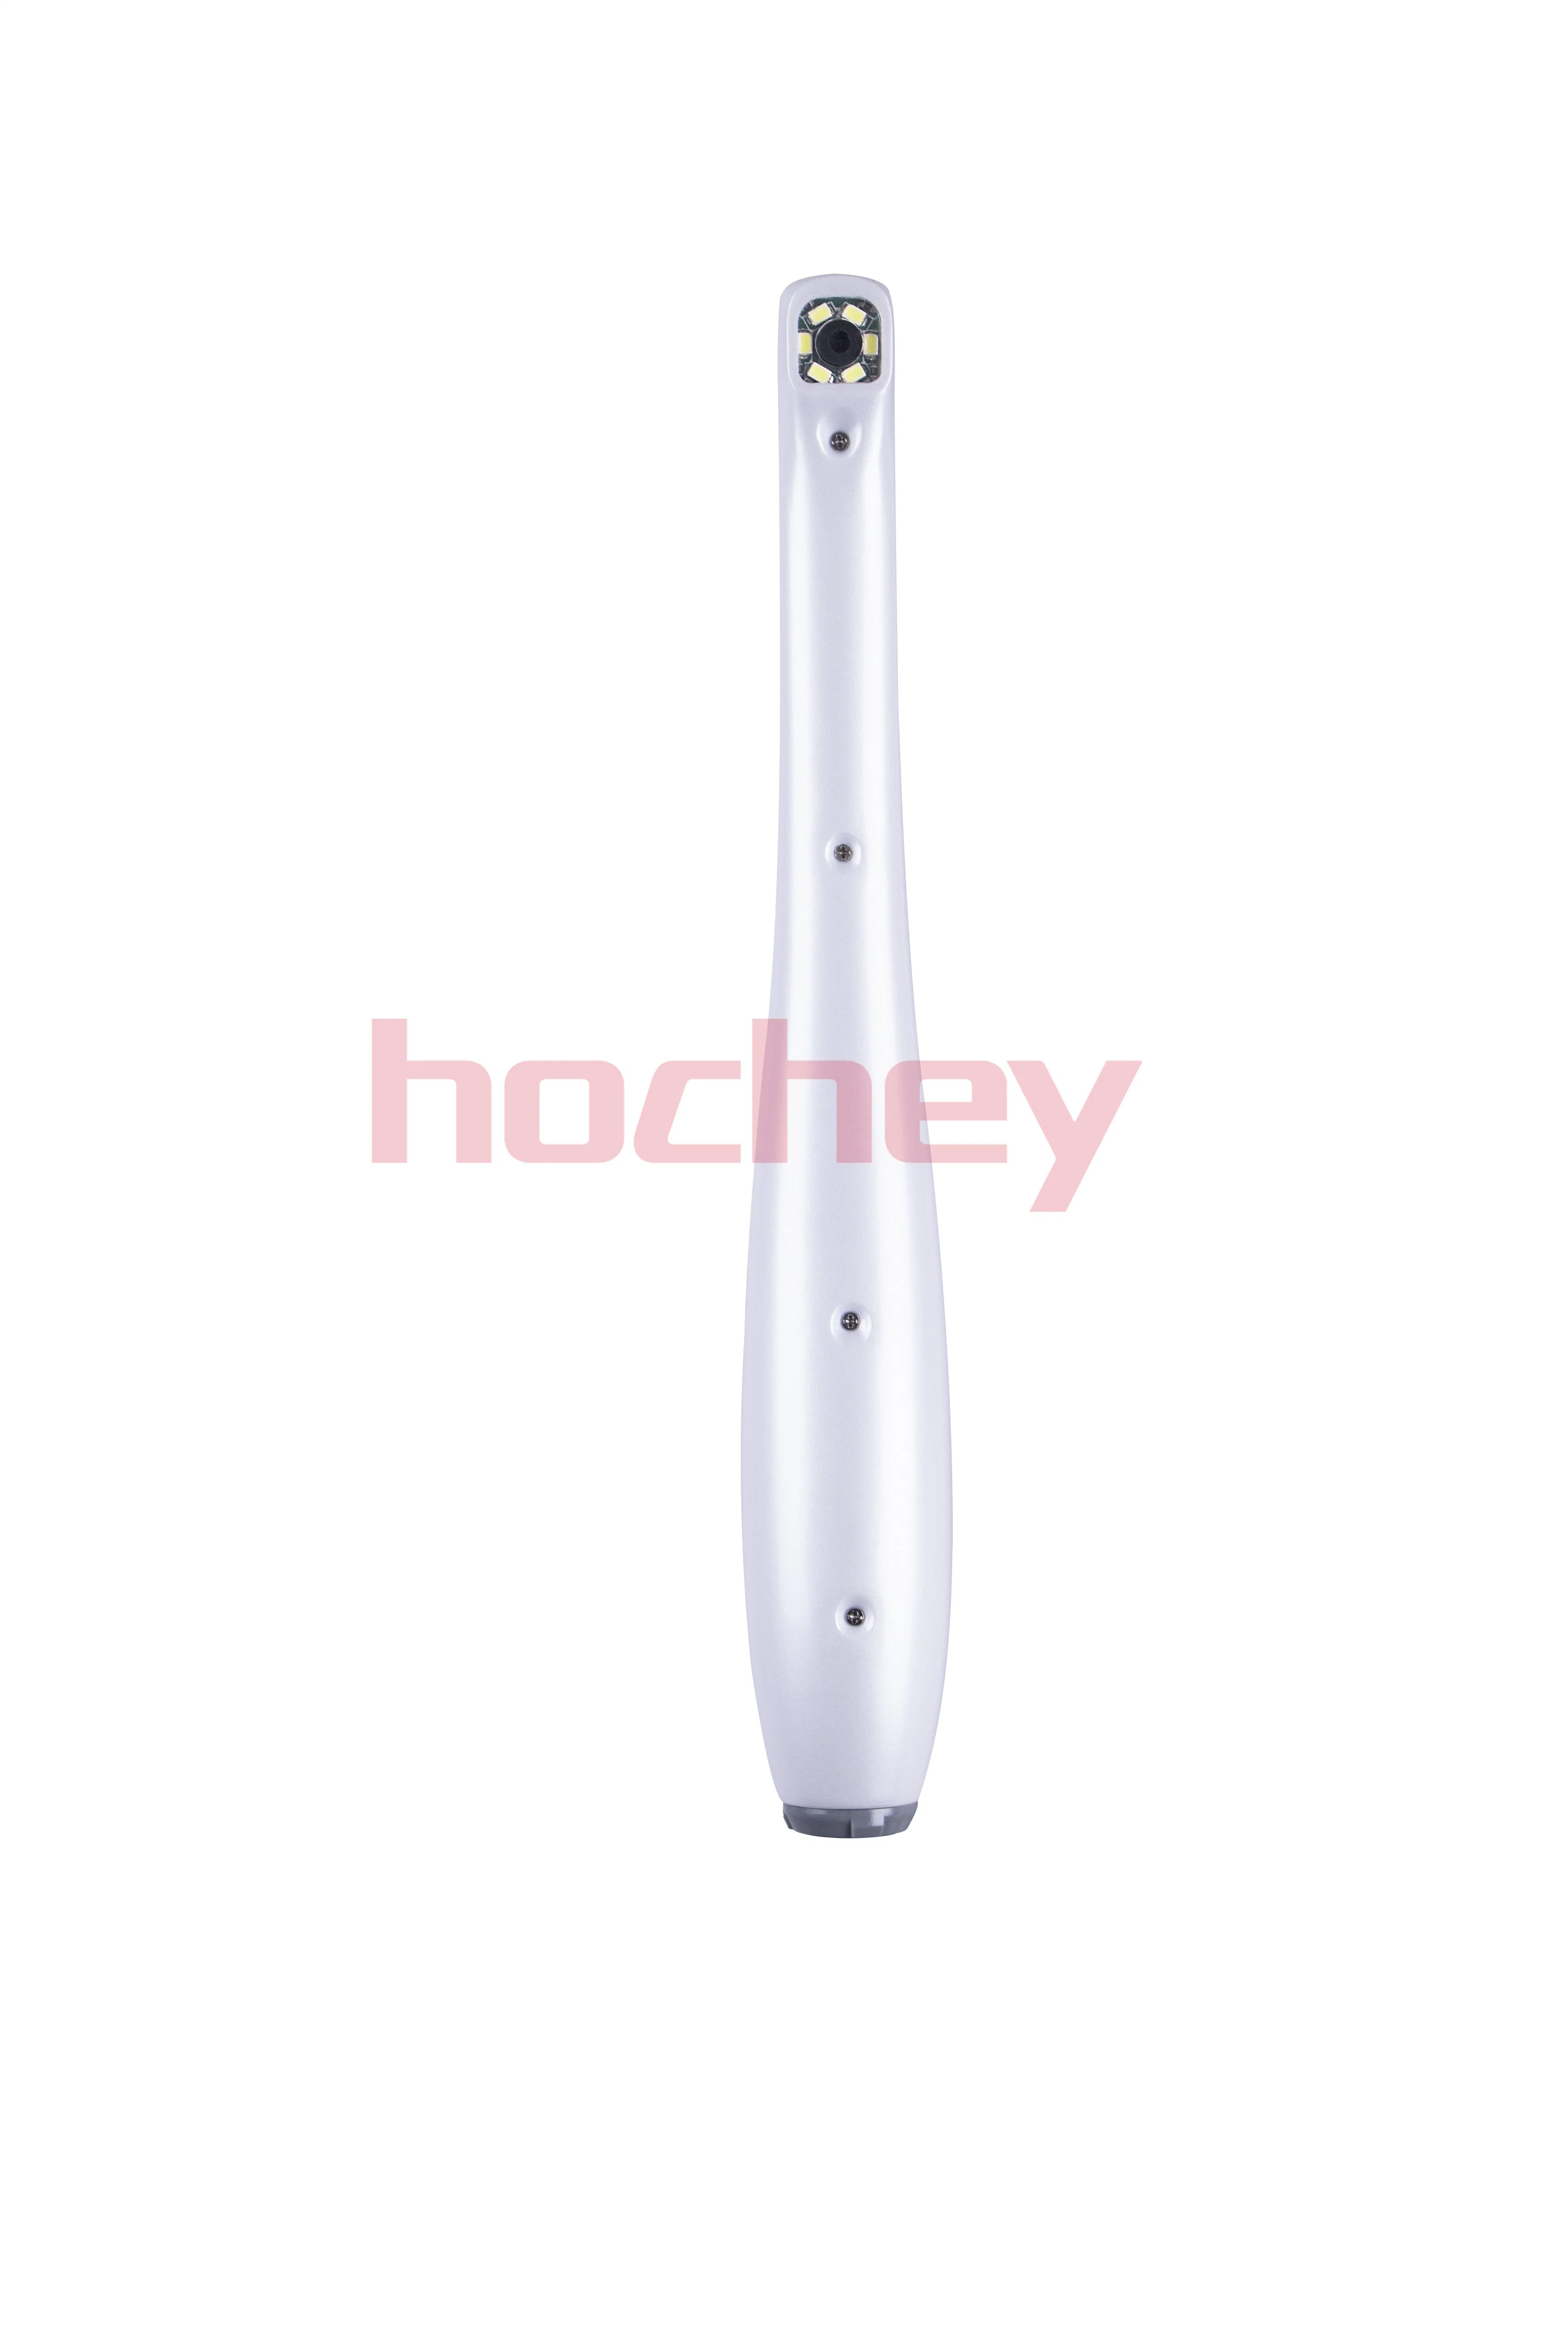 Hochey Medical Resolution 1080P 8PCS LED Lights Dental Endoscope Dental Light with Camera